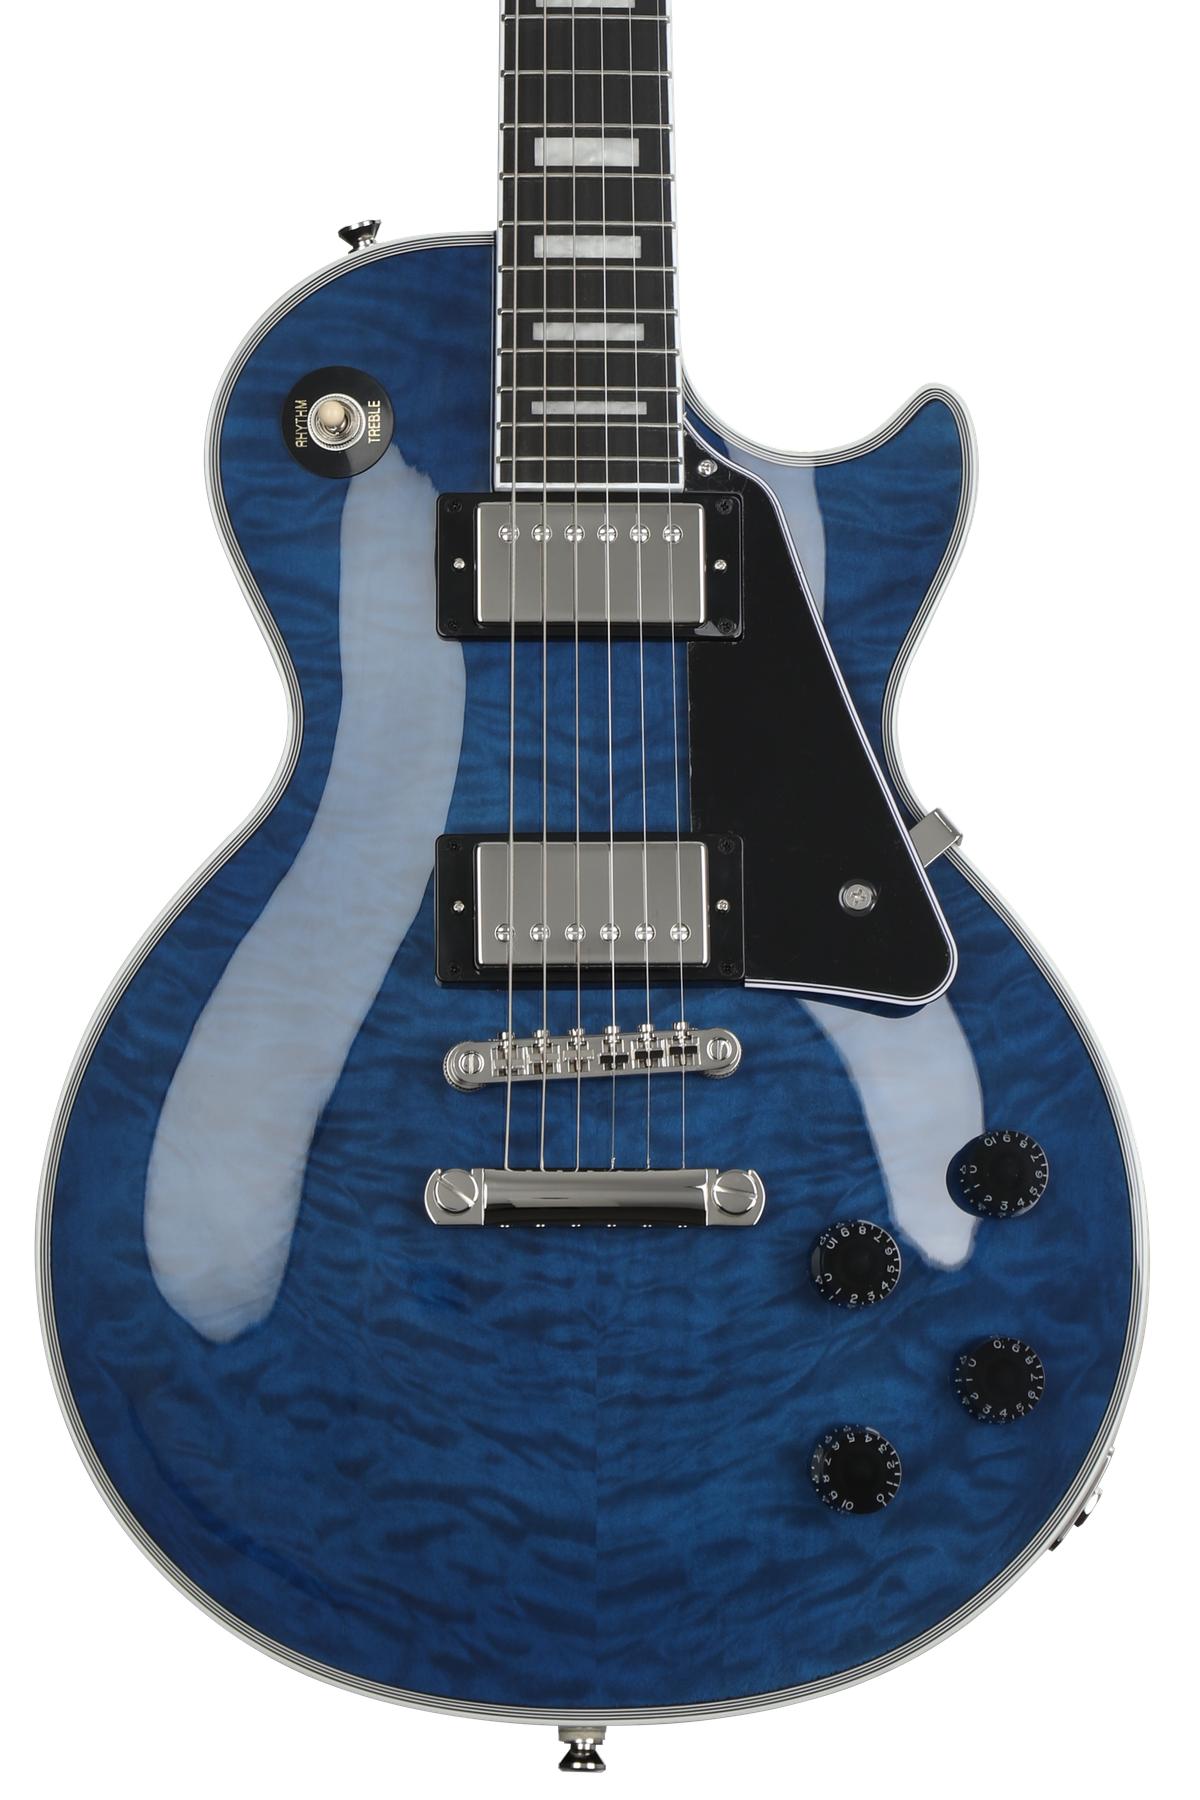 Epiphone Les Paul Custom Electric Guitar - Viper Blue, Sweetwater Exclusive